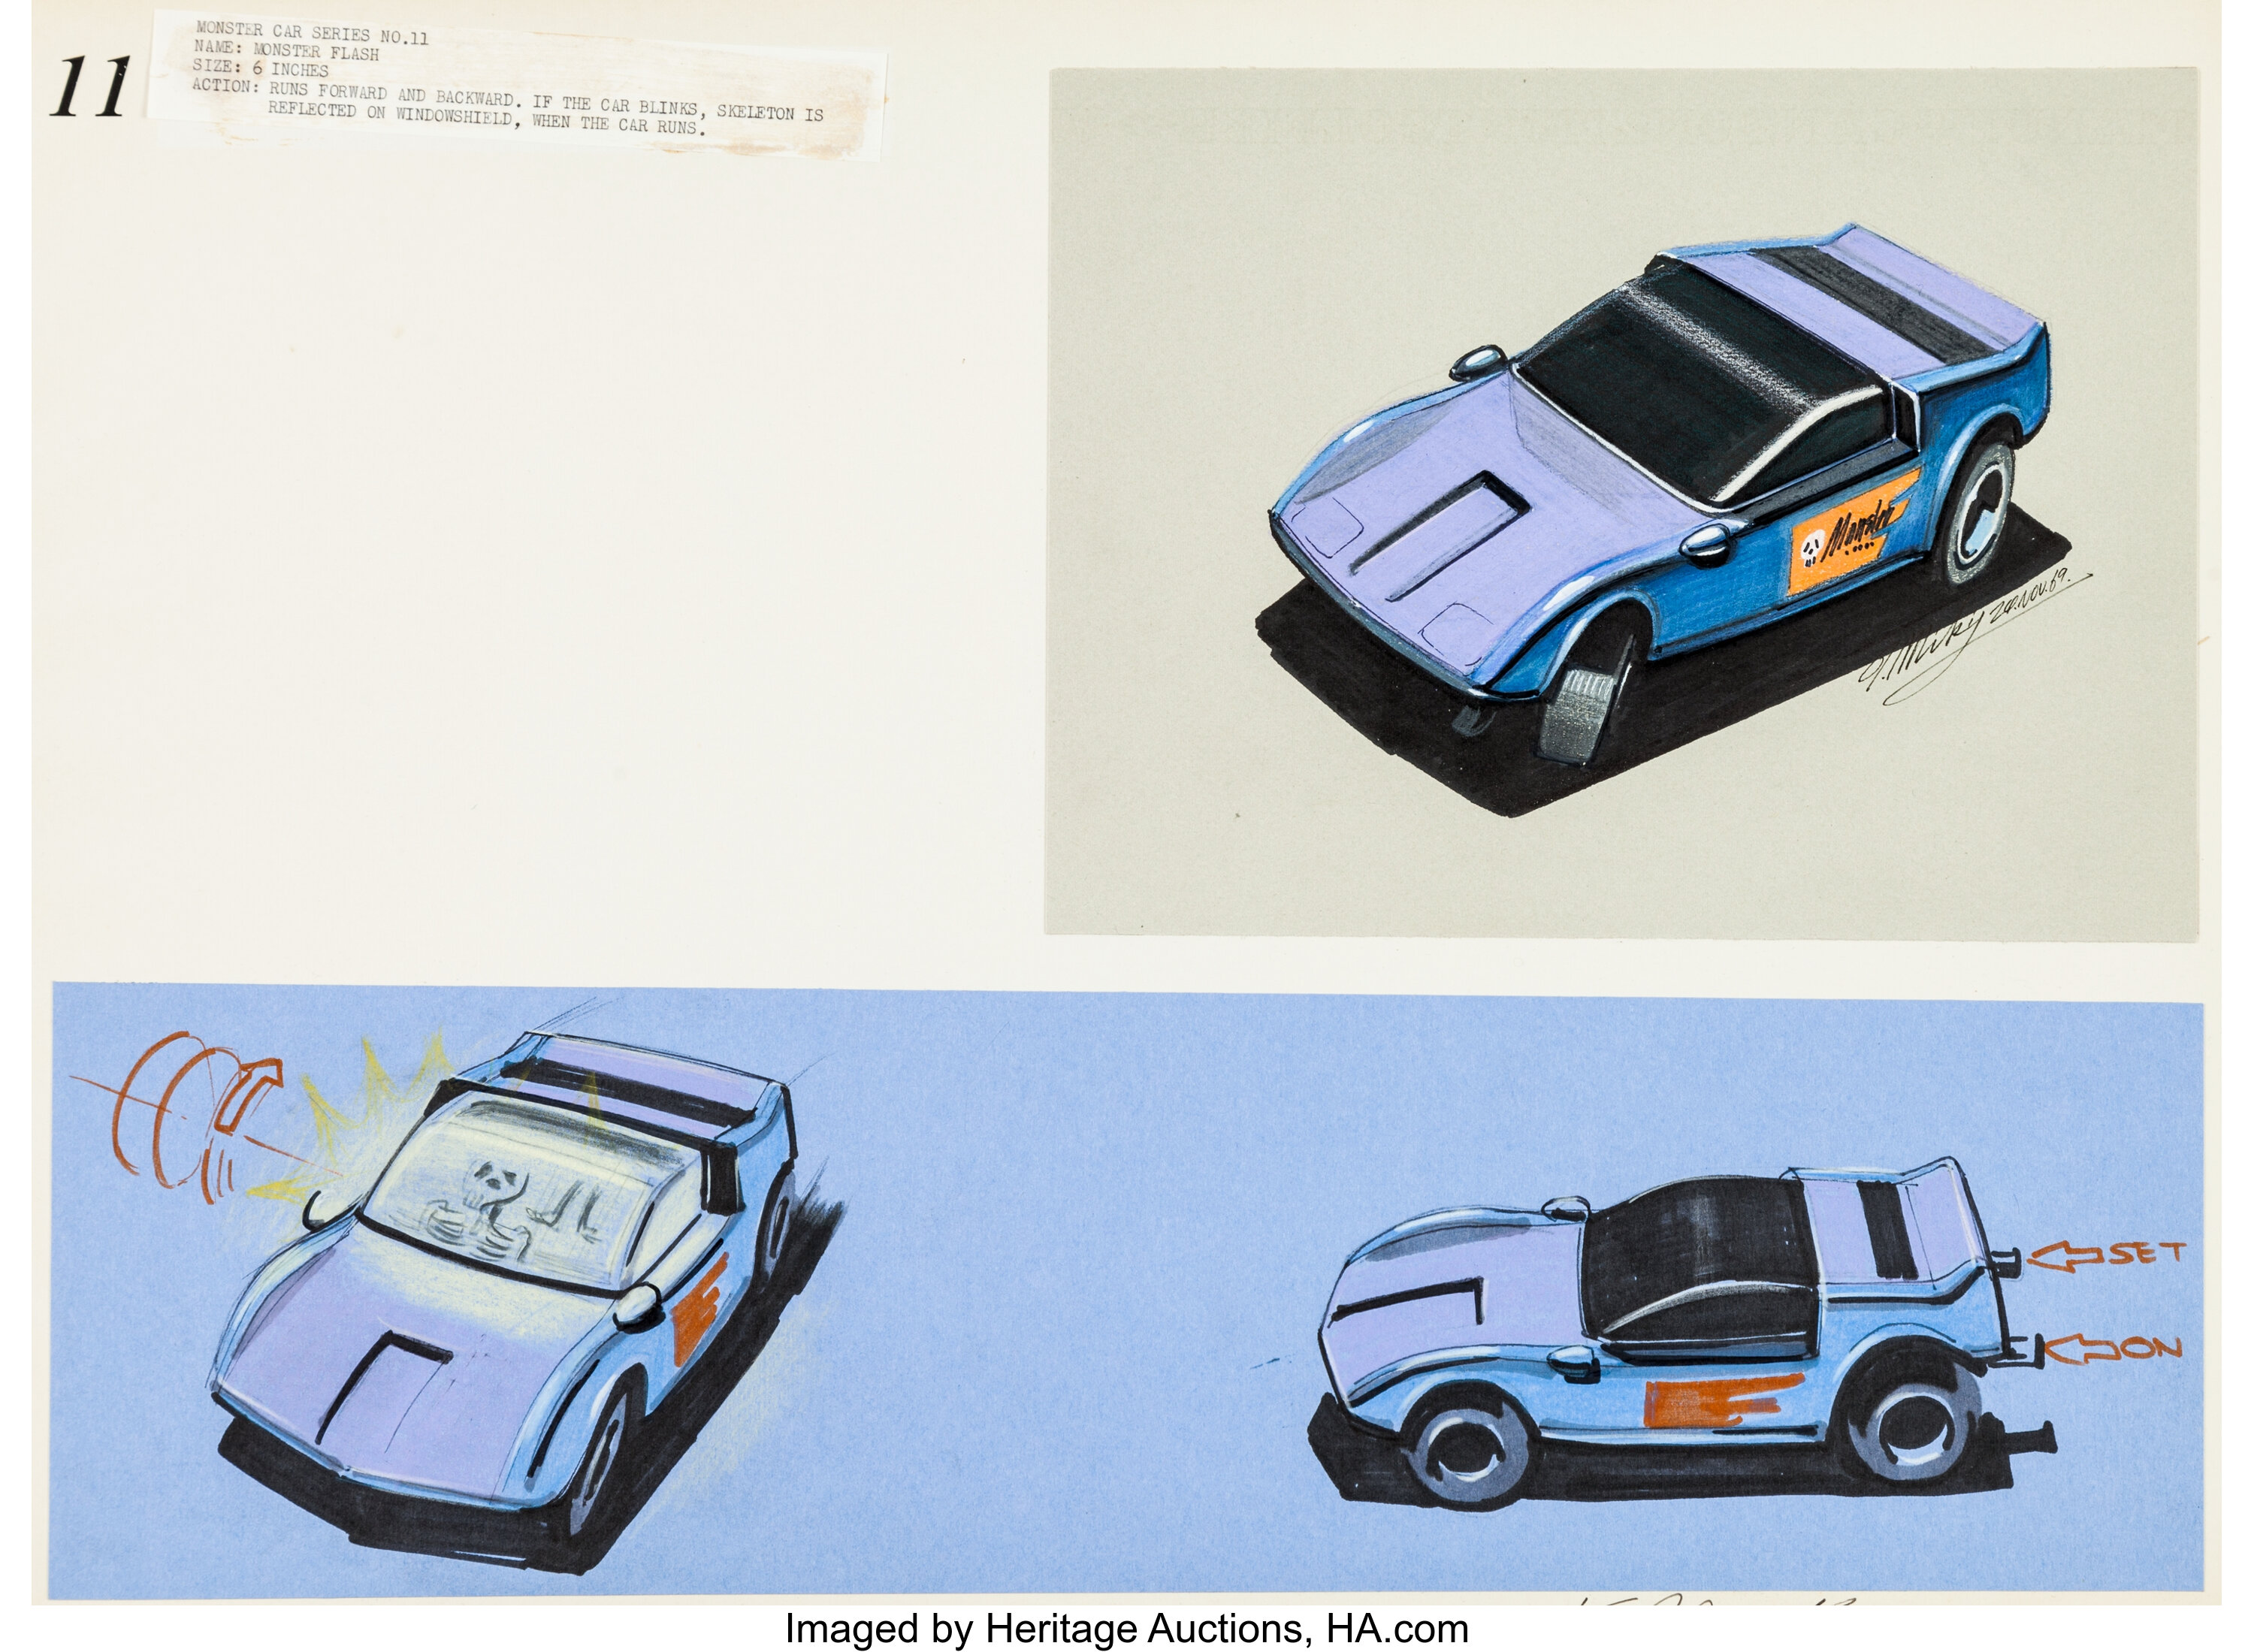 Monster Car Series No 11 Monster Flash Concept Sketch